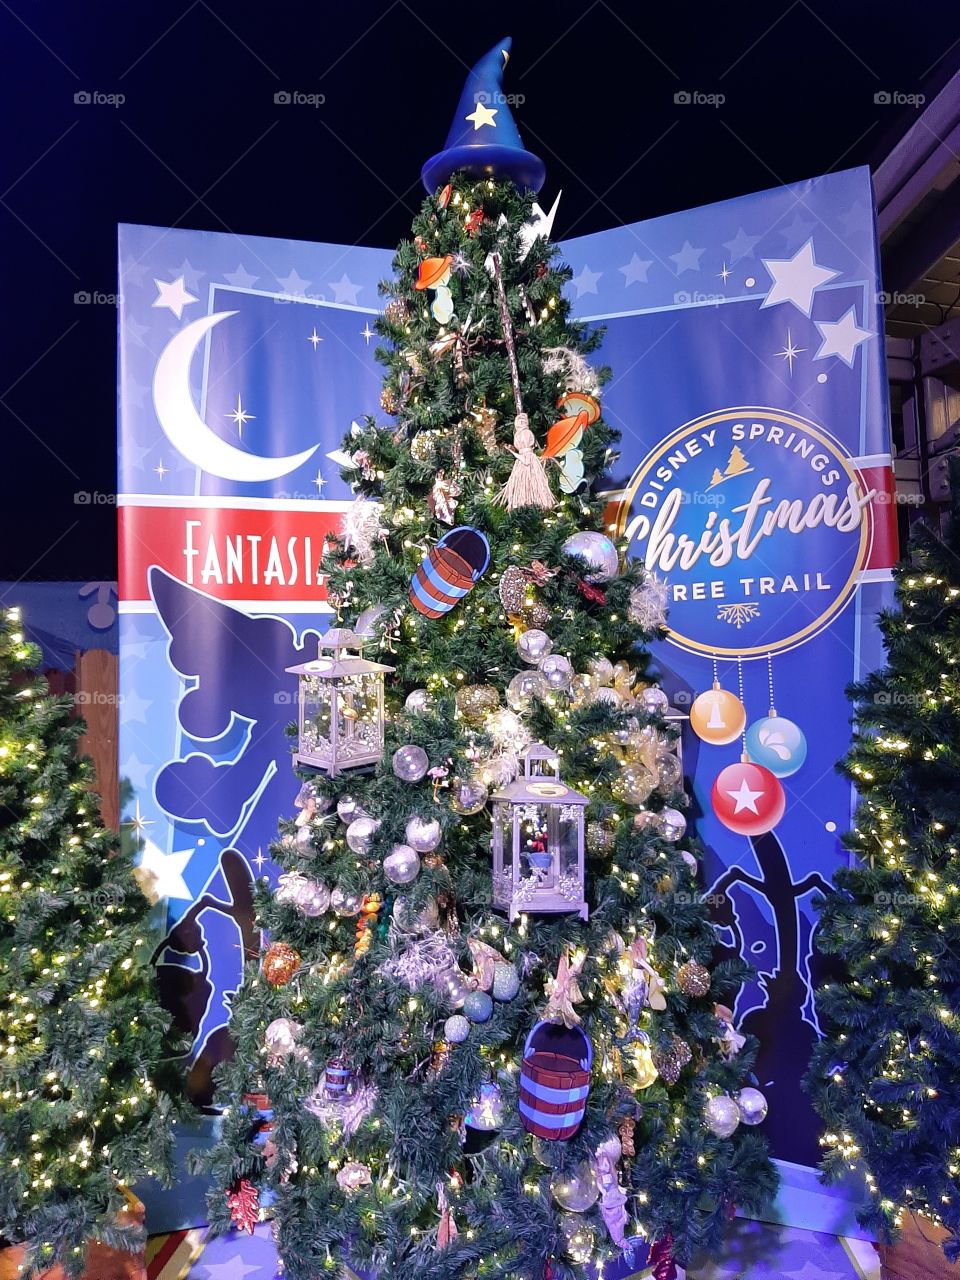 fantasia Christmas tree